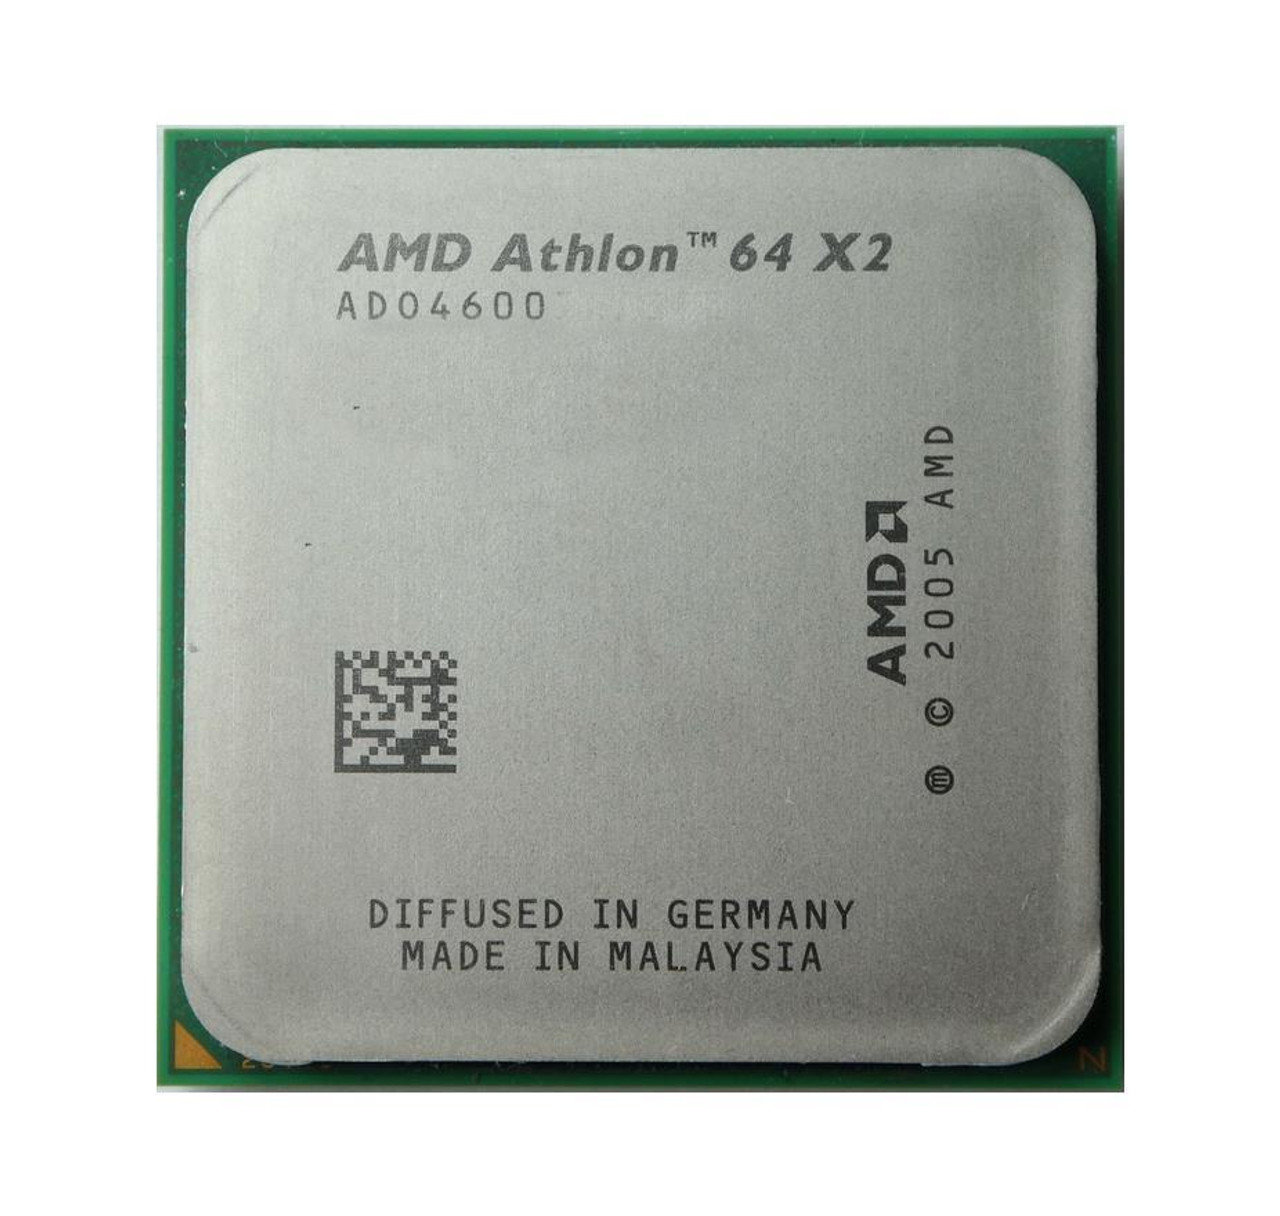 AMD Athlon 64 X2 4600+ Dual-Core 2.40GHz 1MB L2 Cache Socket 939 Processor